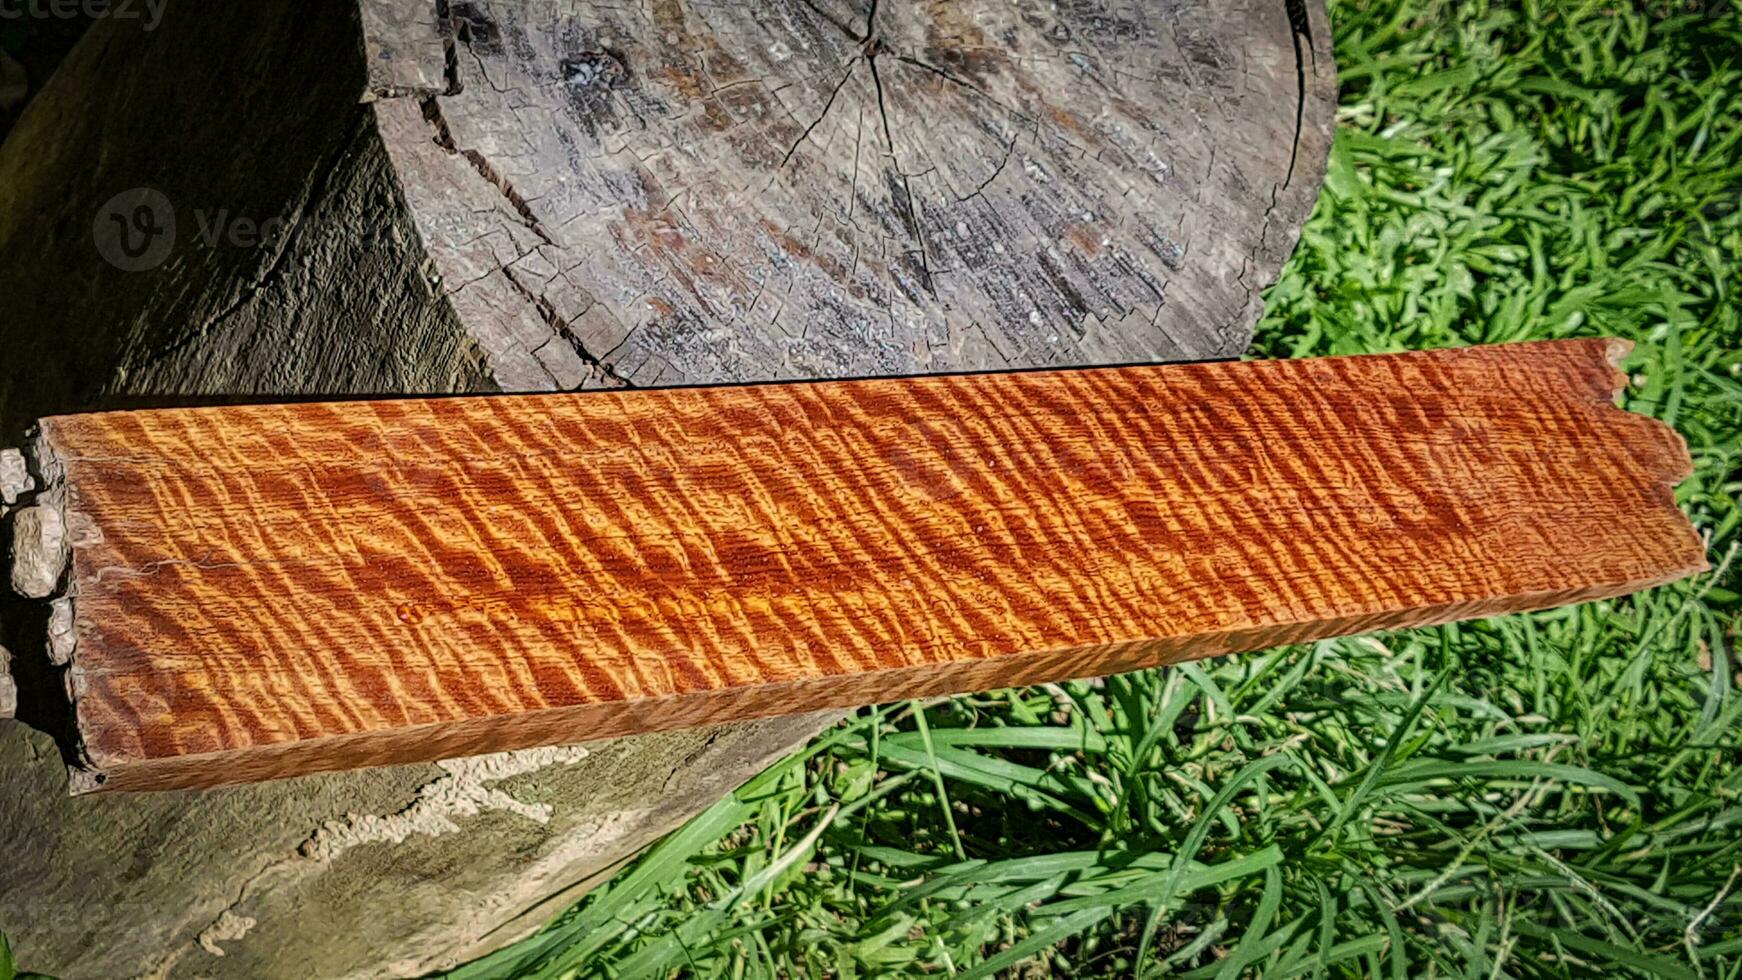 le bois de padouk de birmanie a un grain de tigre ou de rayure bouclée photo